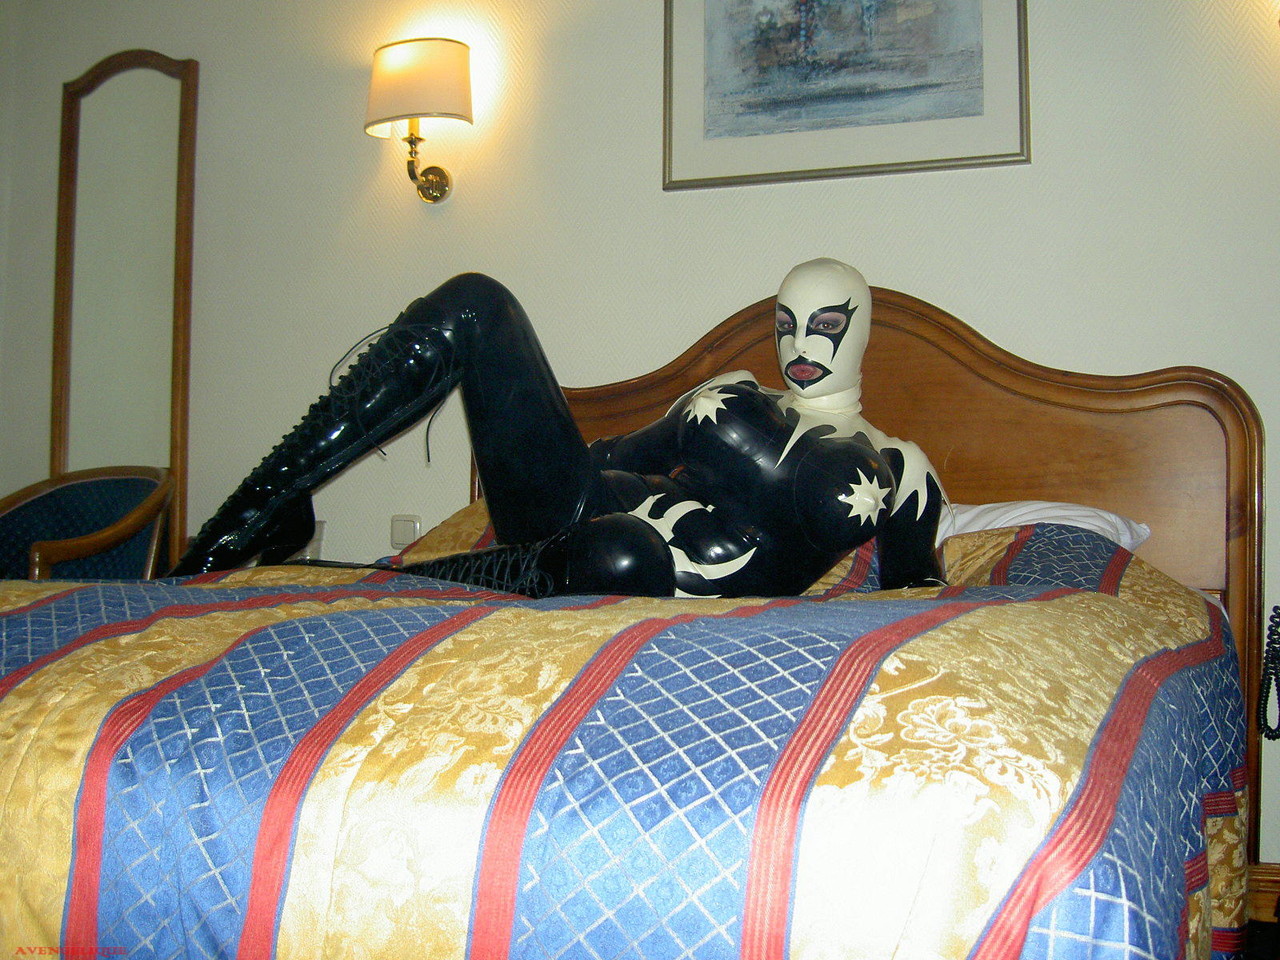 Fetish model Darkwing Zero poses on a hotel room bed in latex clothing ポルノ写真 #426050021 | Rubber Tits Pics, Darkwing Zero, Latex, モバイルポルノ